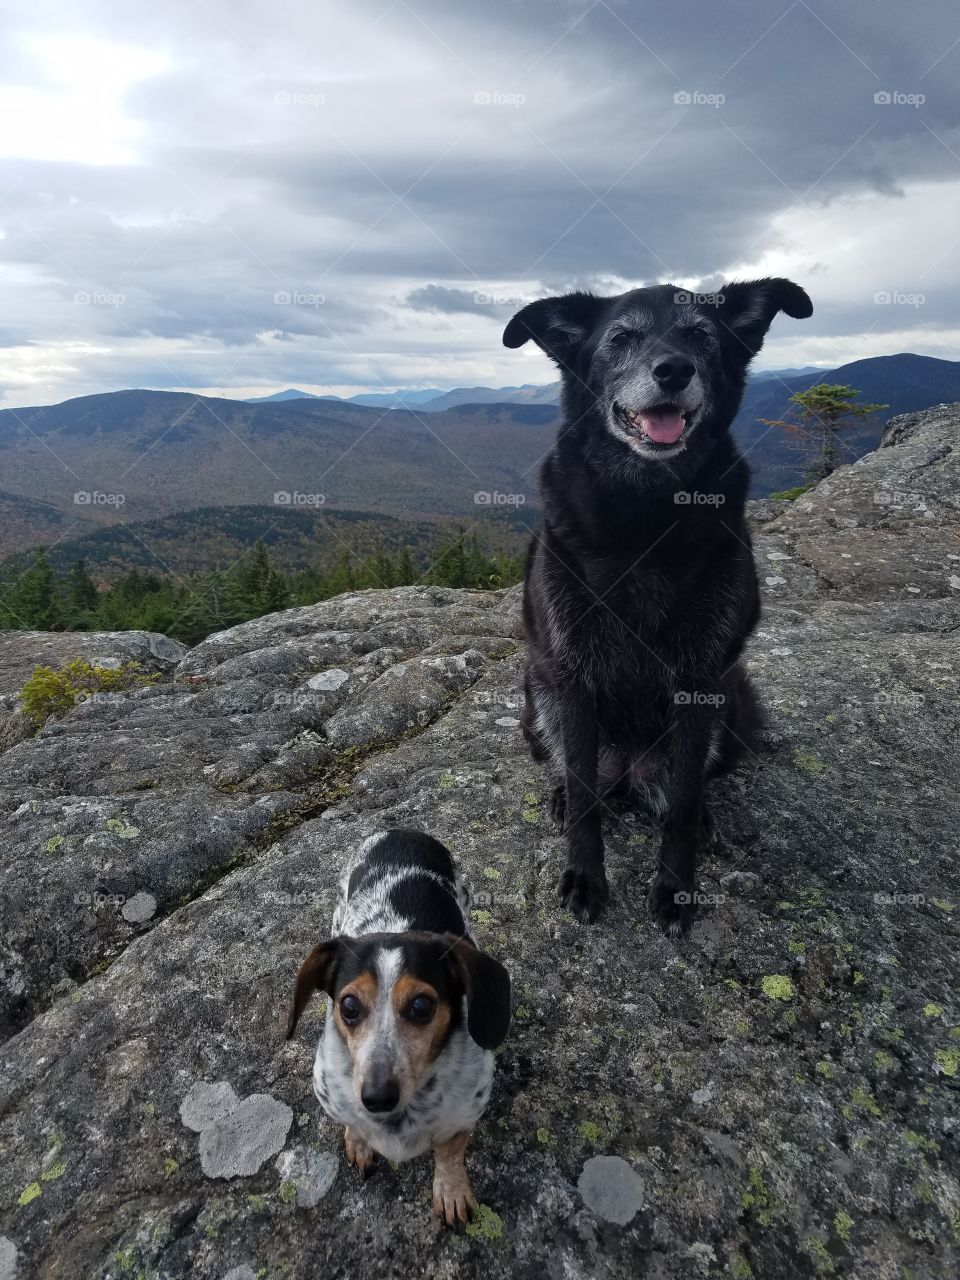 Hiking buddies